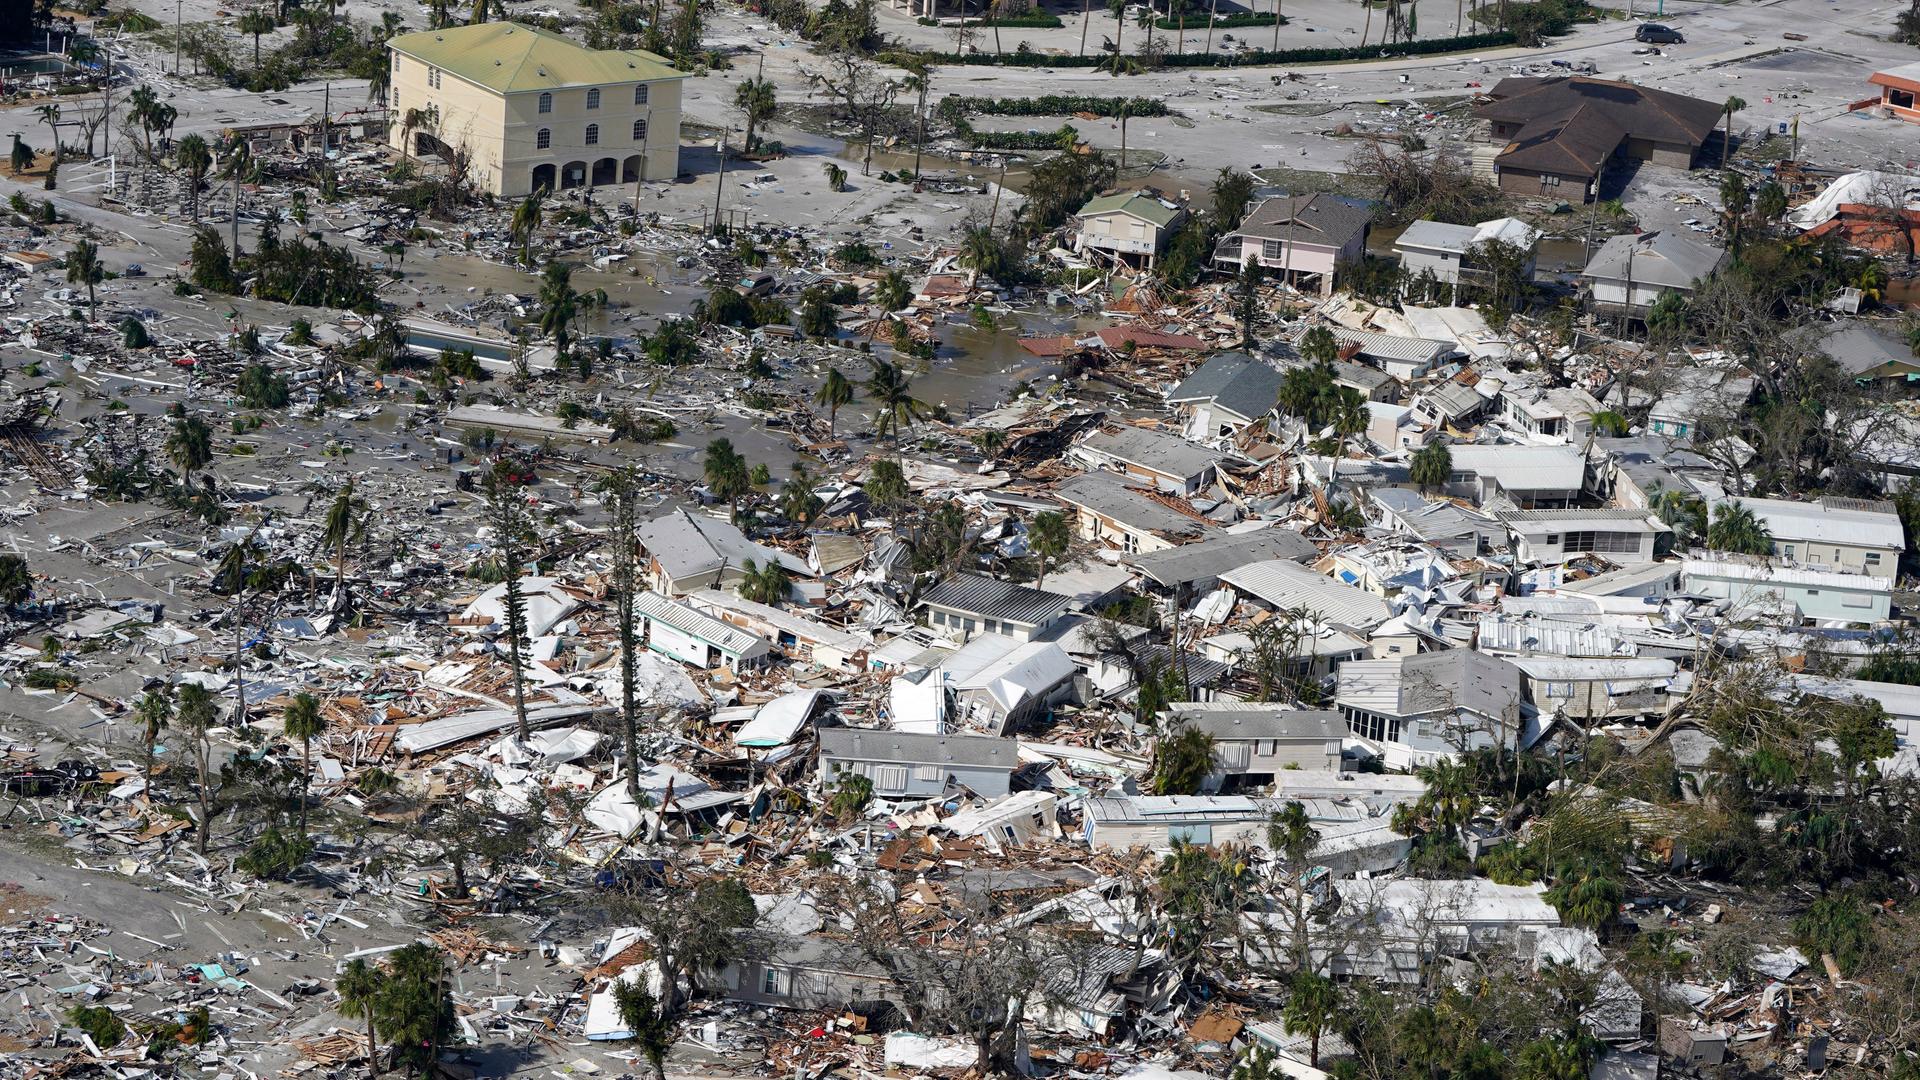 USA - Hurrikan "Ian" zieht weiter nach North Carolina - Mindestens 12 Tote in Florida